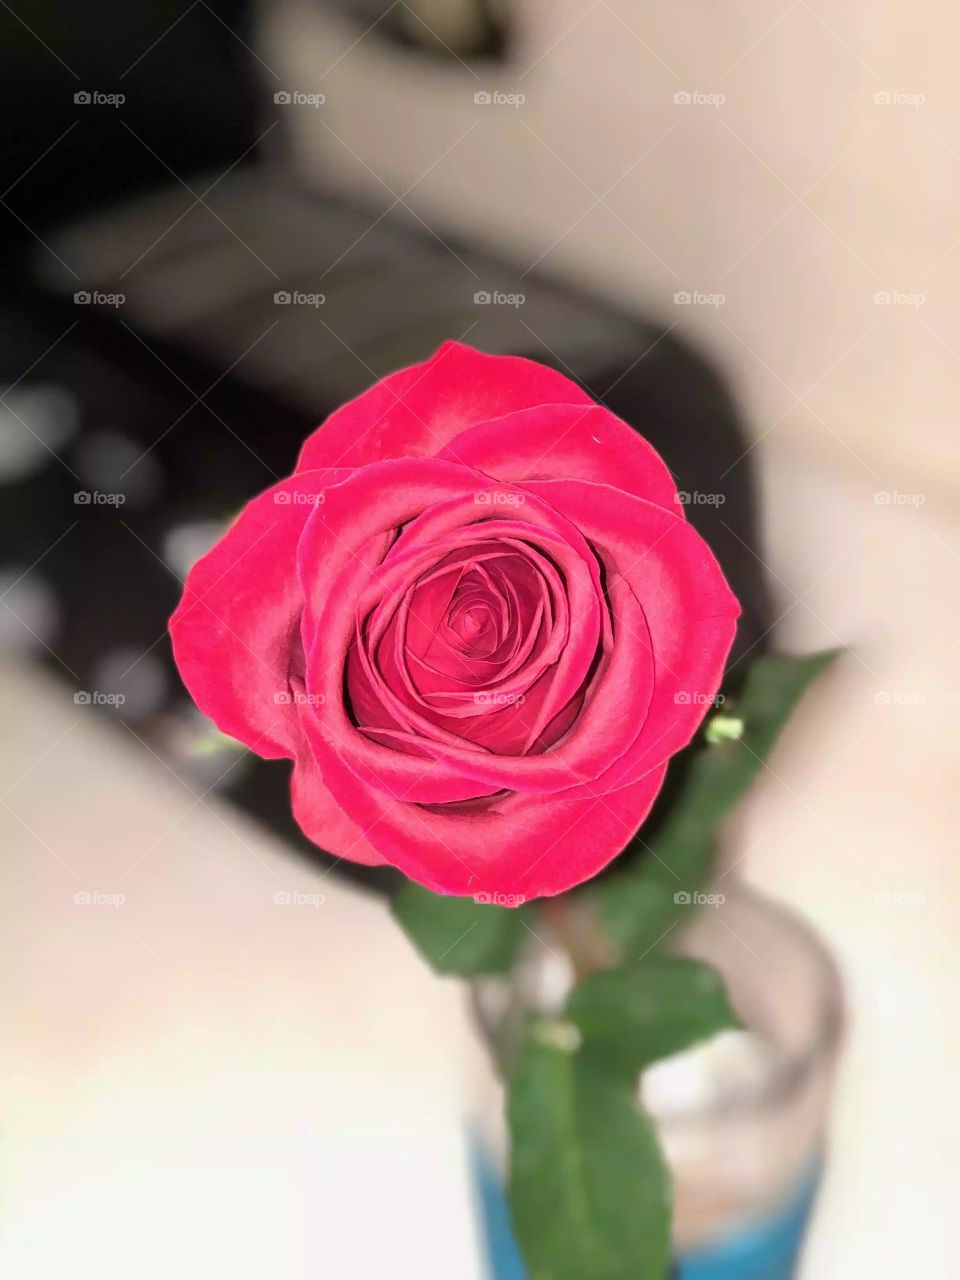 Gorgeous detailed rose 